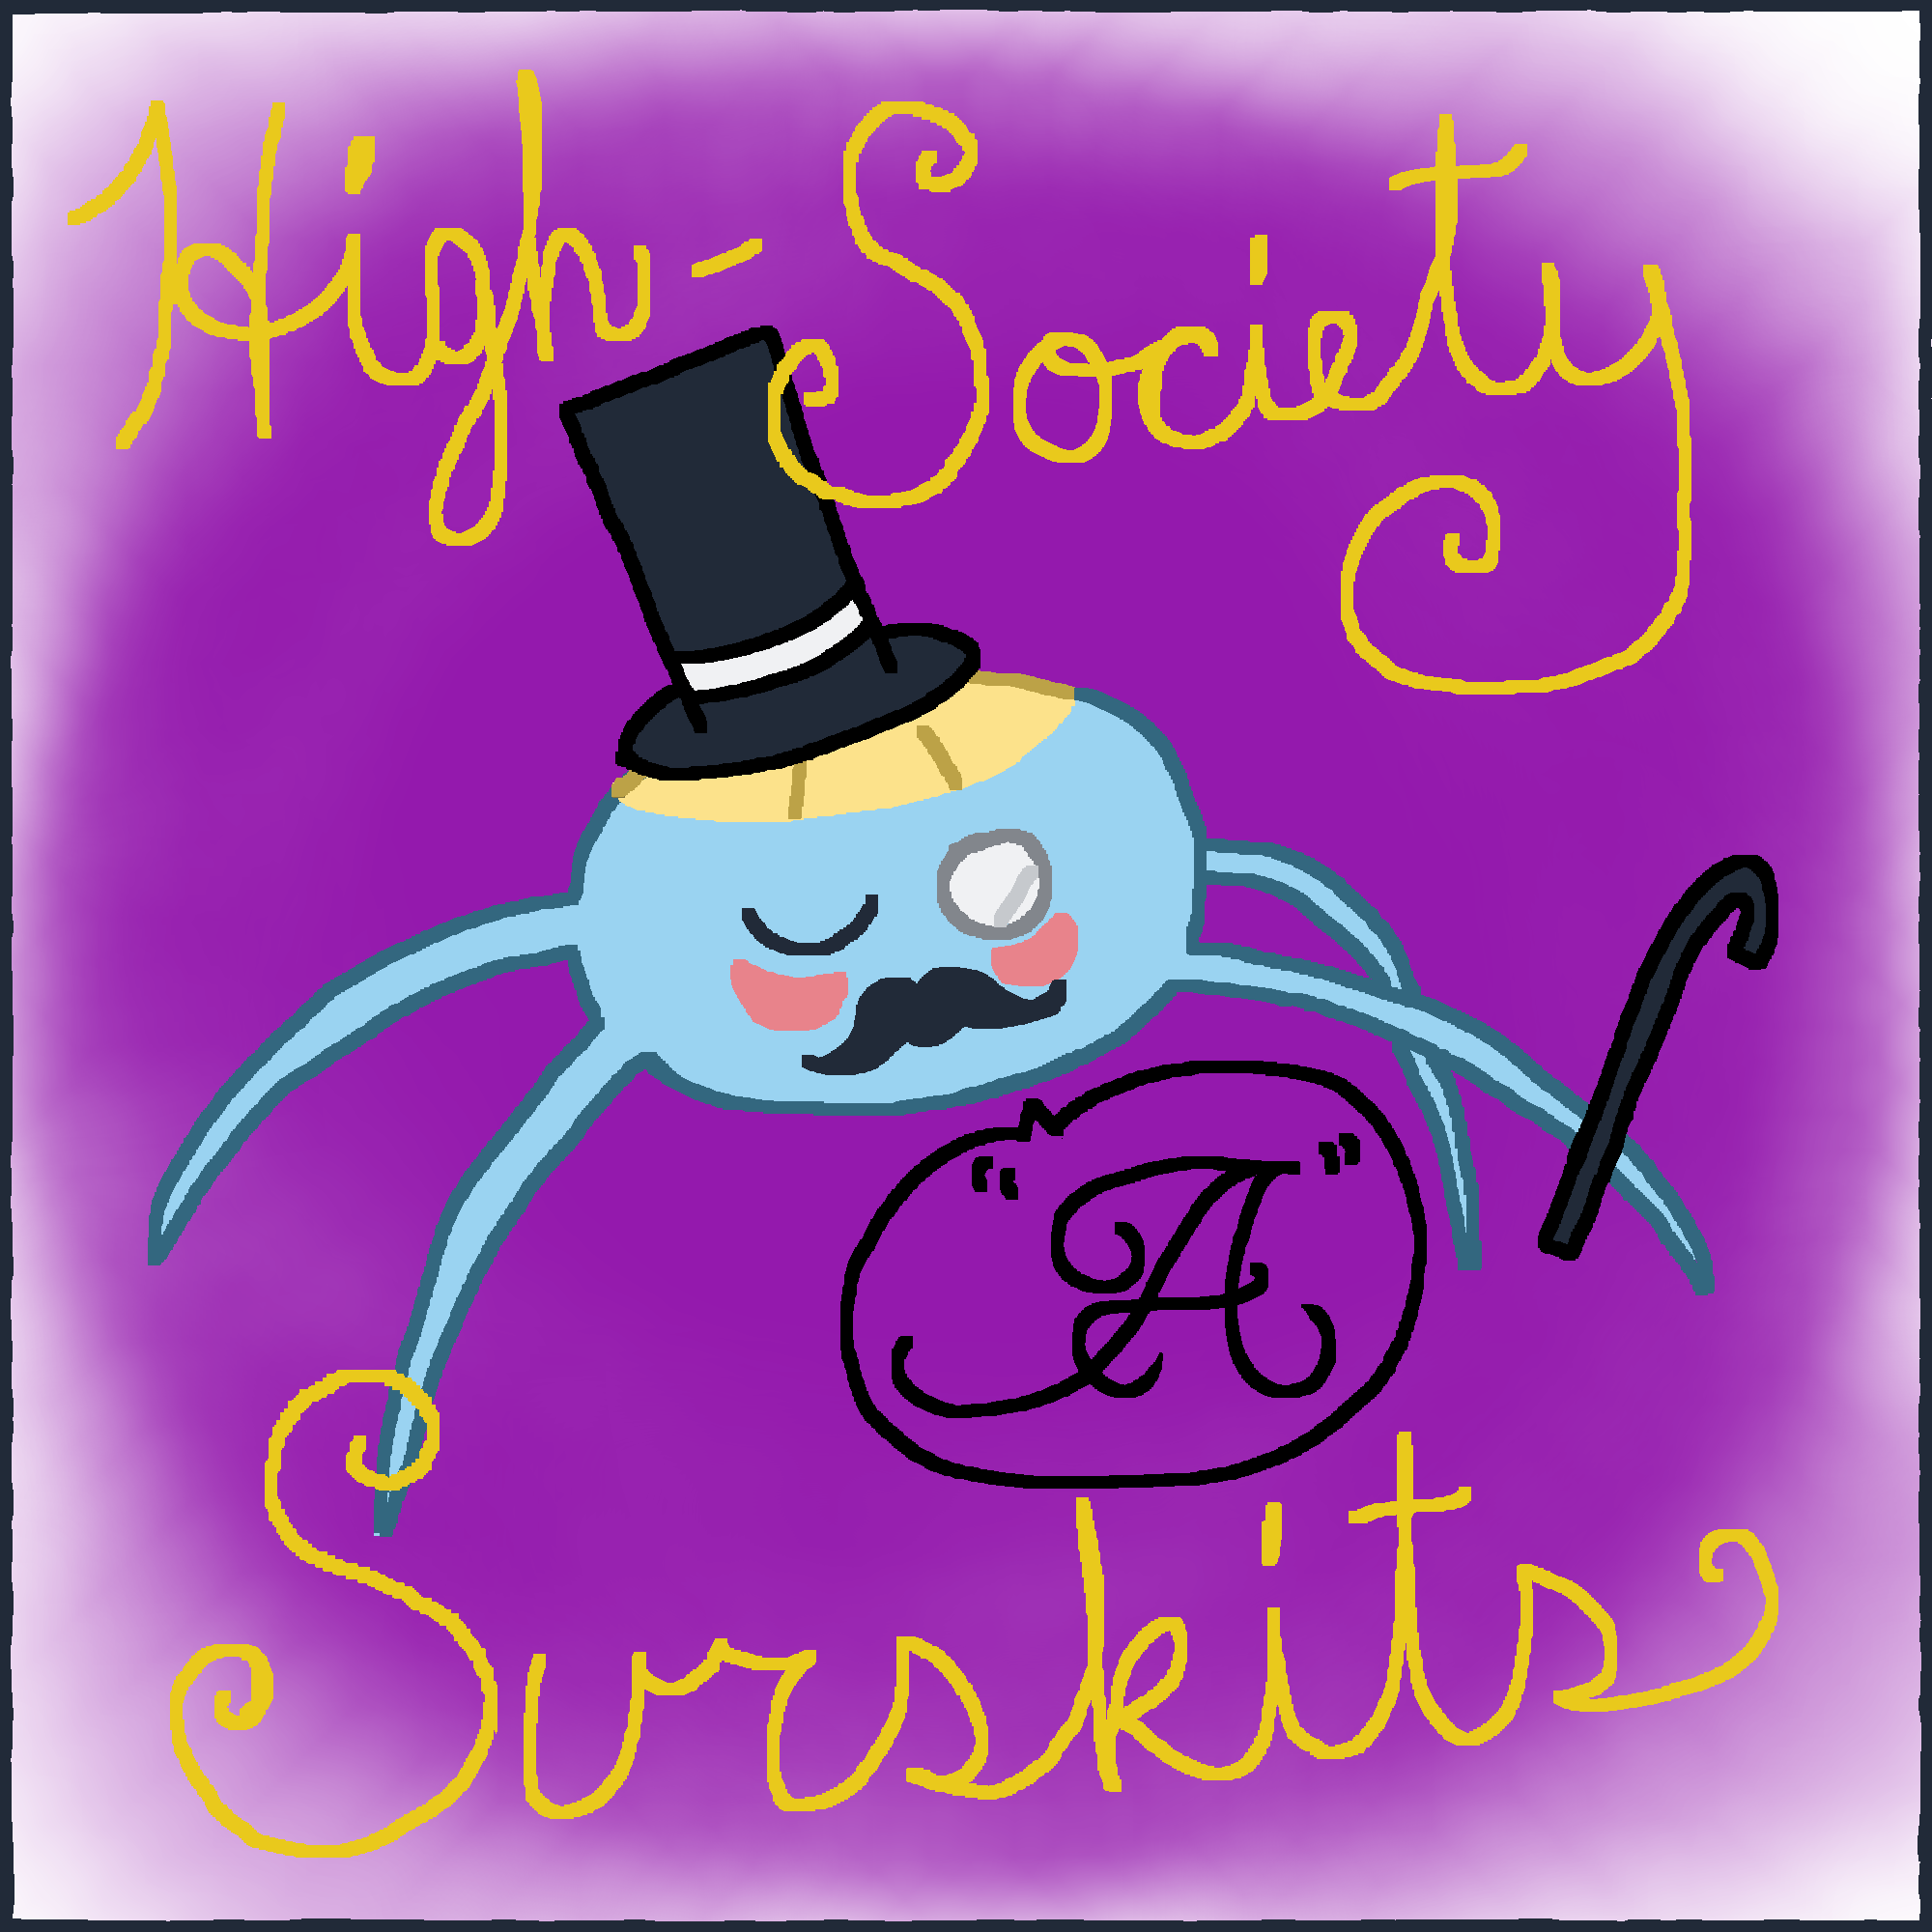 High-Society-Surskits.png